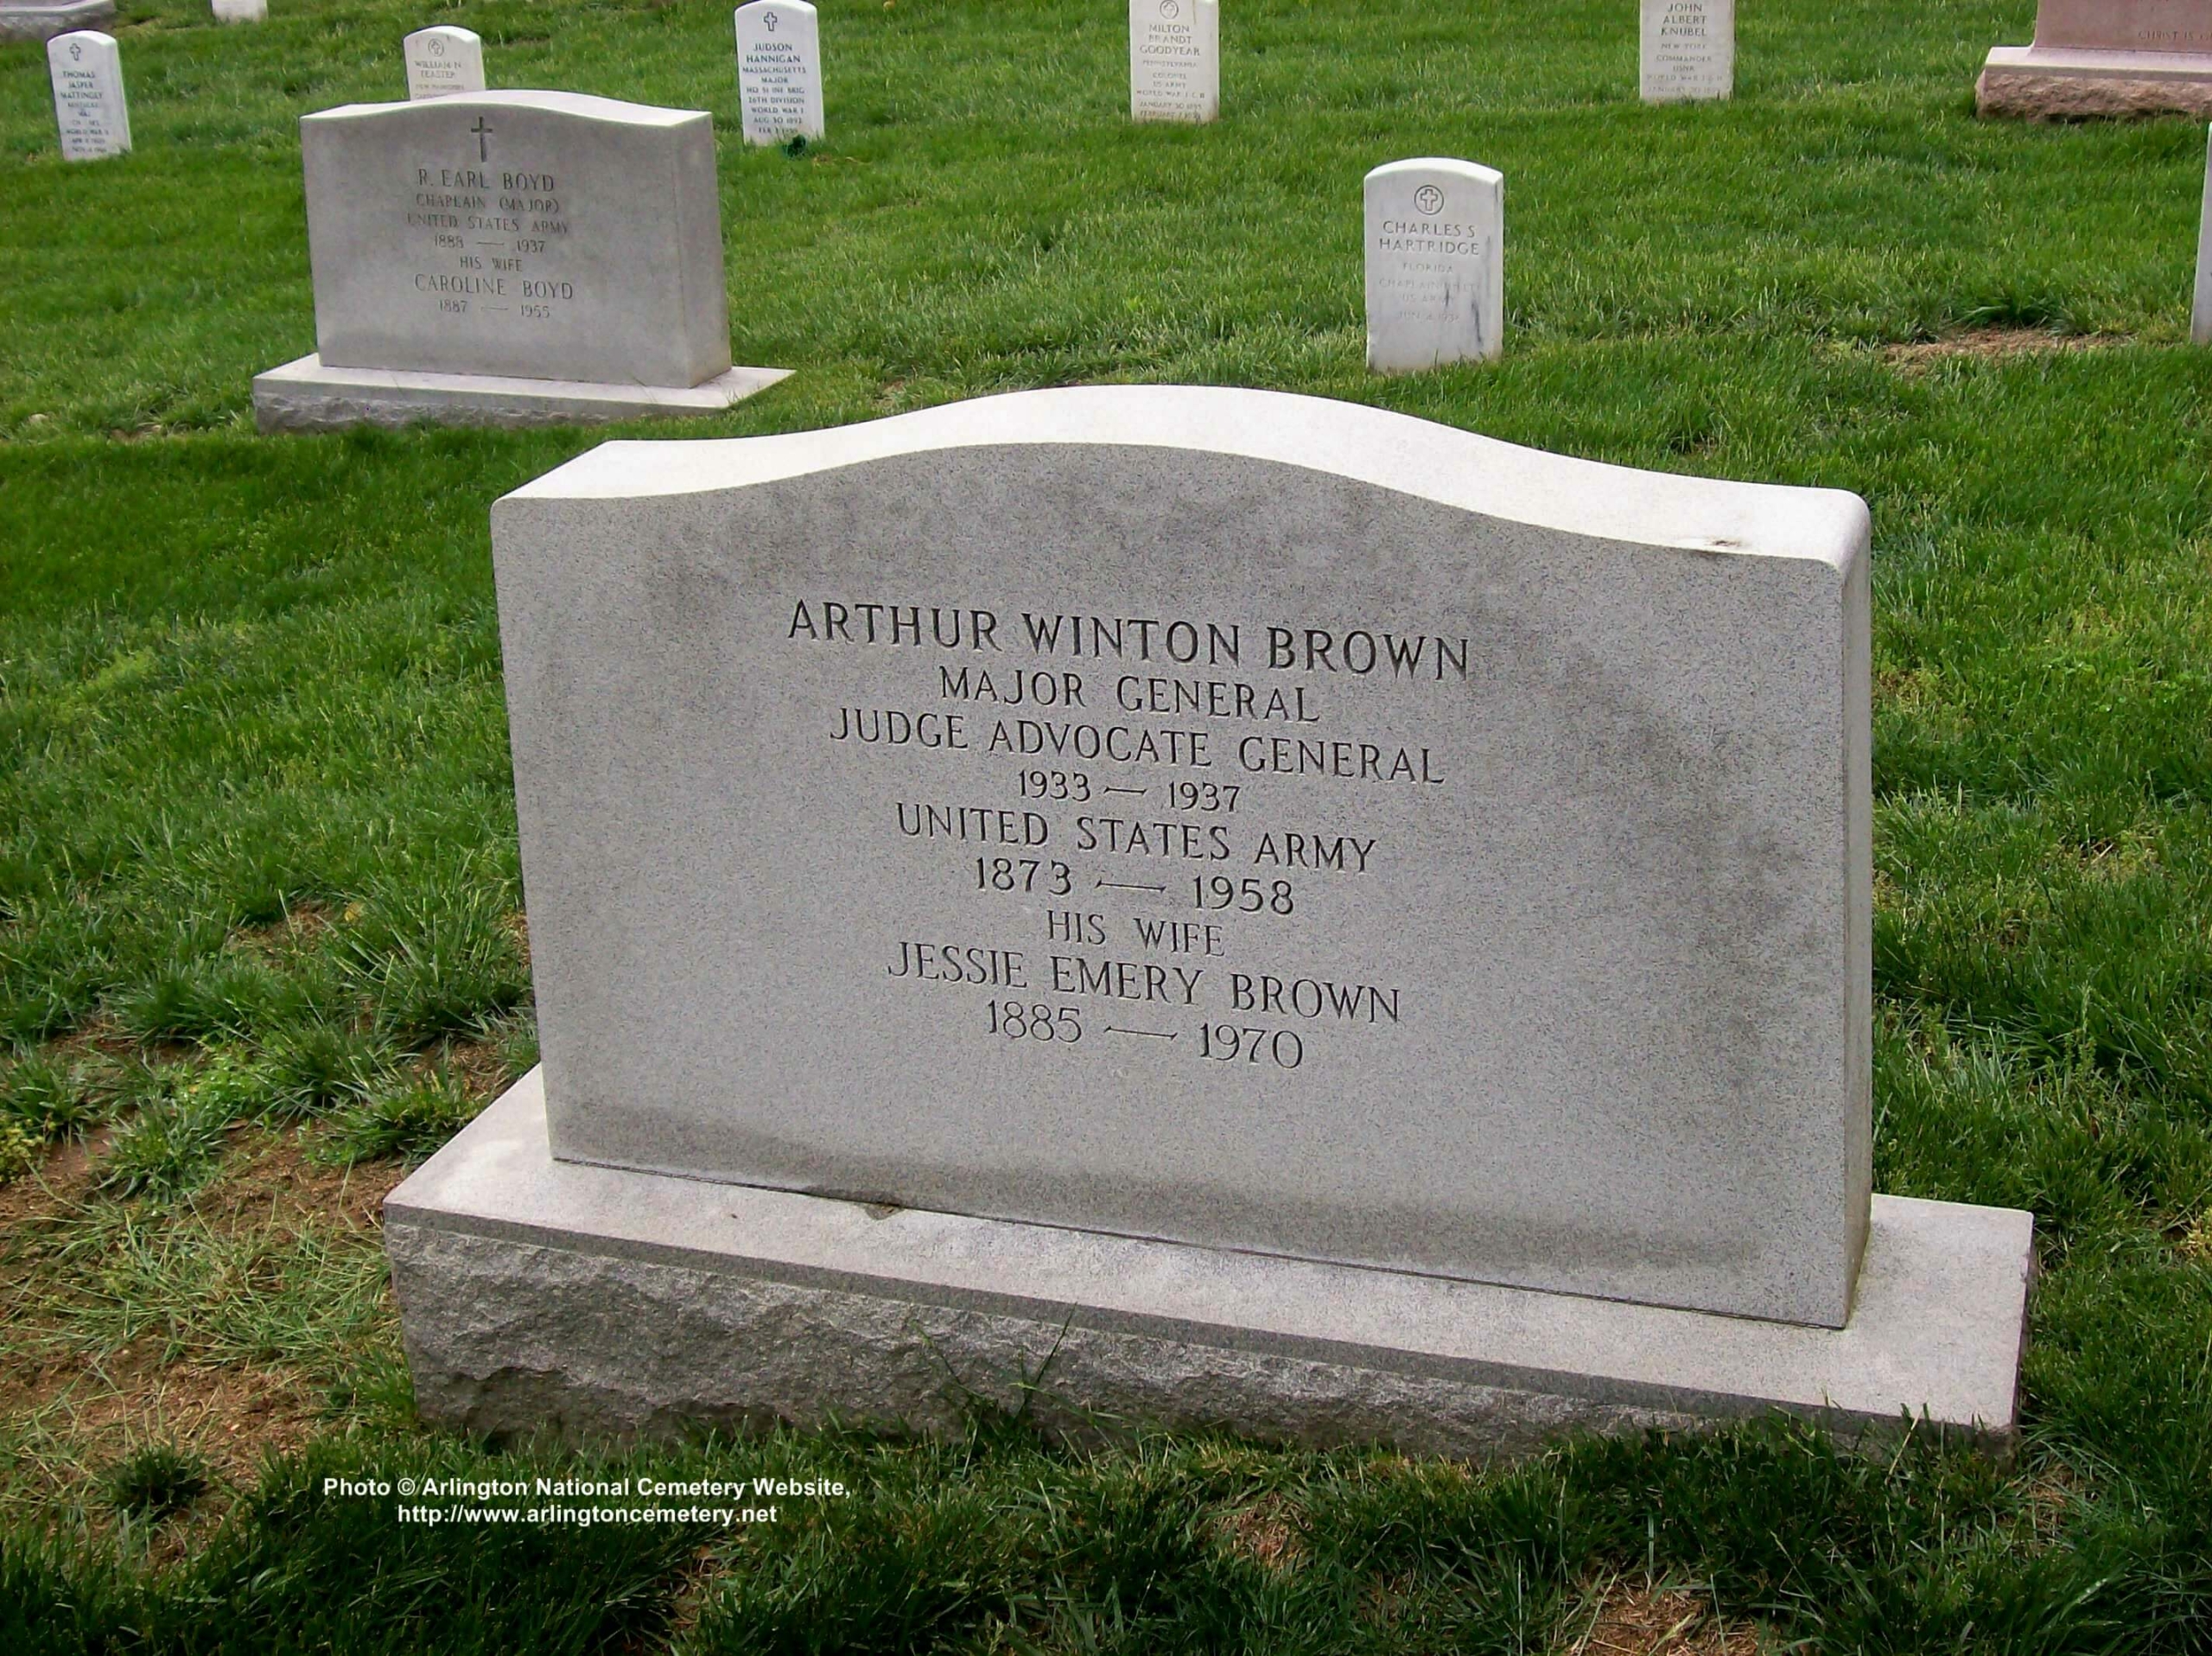 awbrown-gravesite-photo-may-2008-001